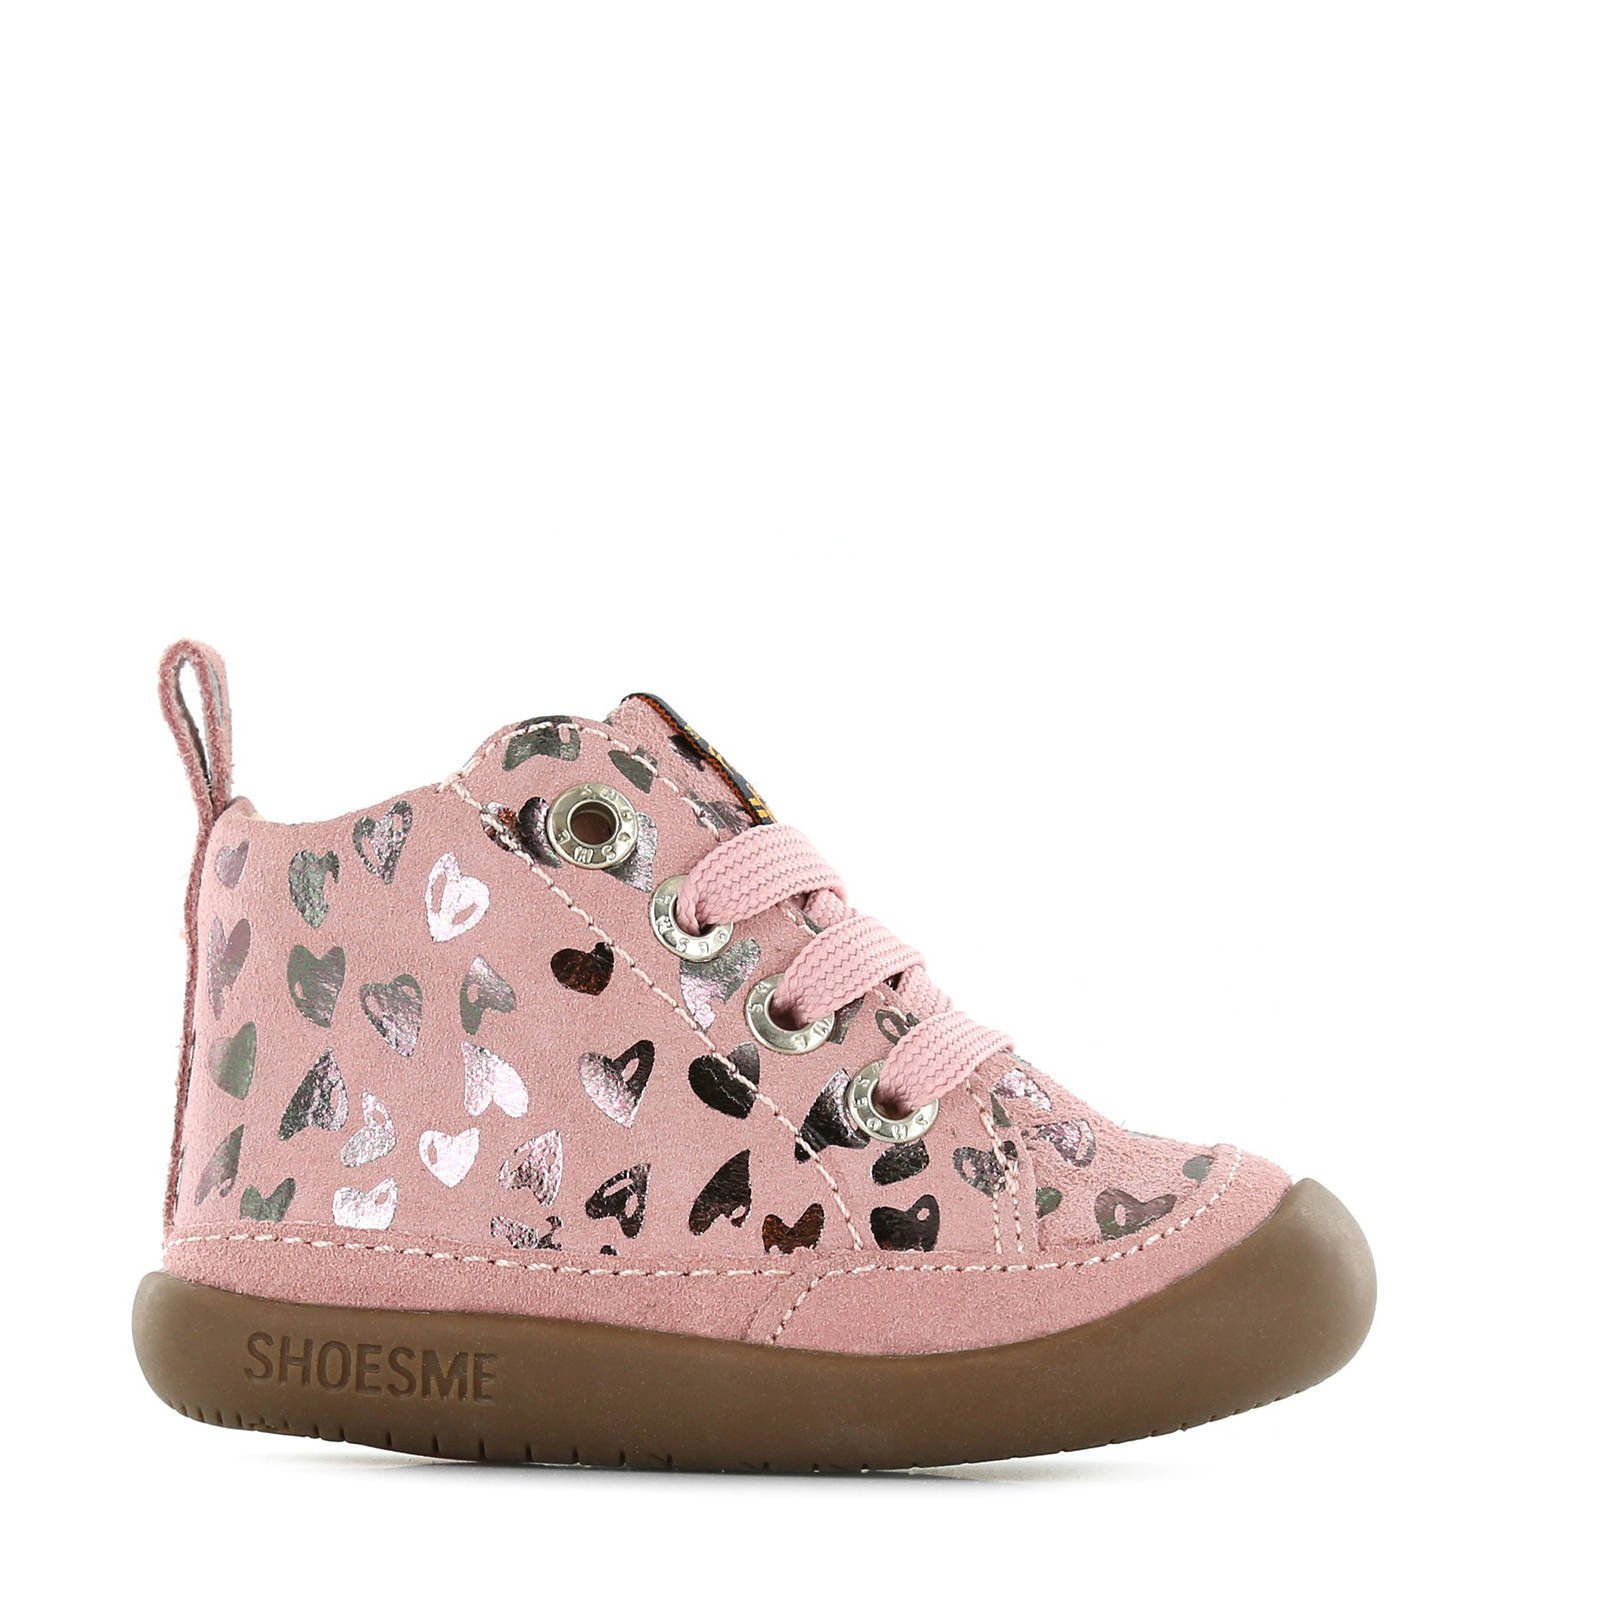 Shoesme Extreme Flex BF20W005 B leren babyschoenen roze/zilver online kopen